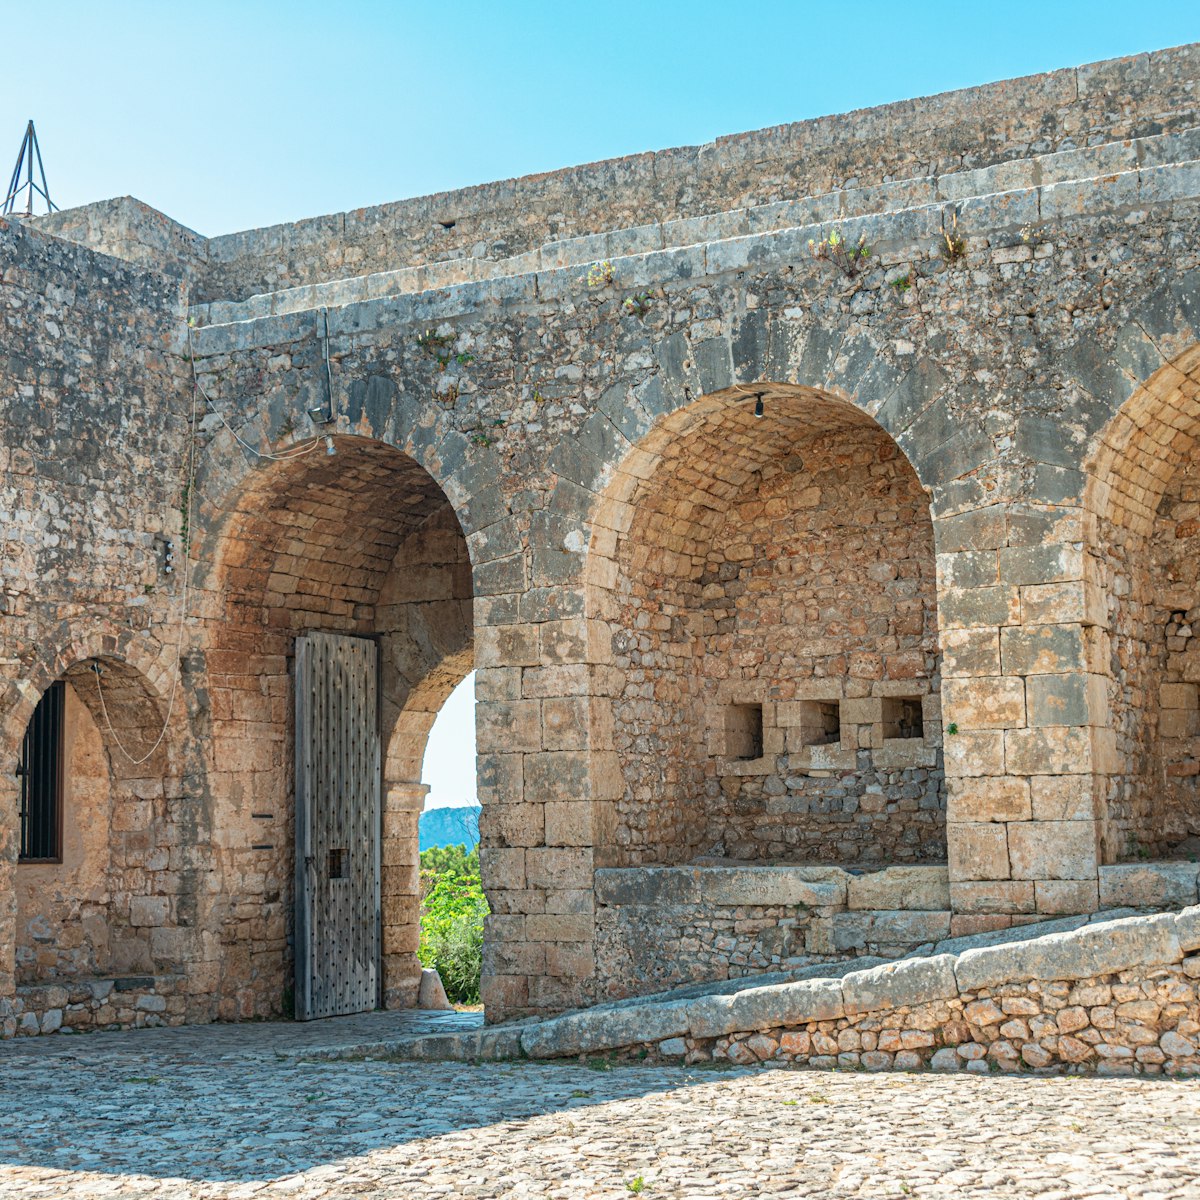 Walls of Neokastro fortress in Pylos, Greece.